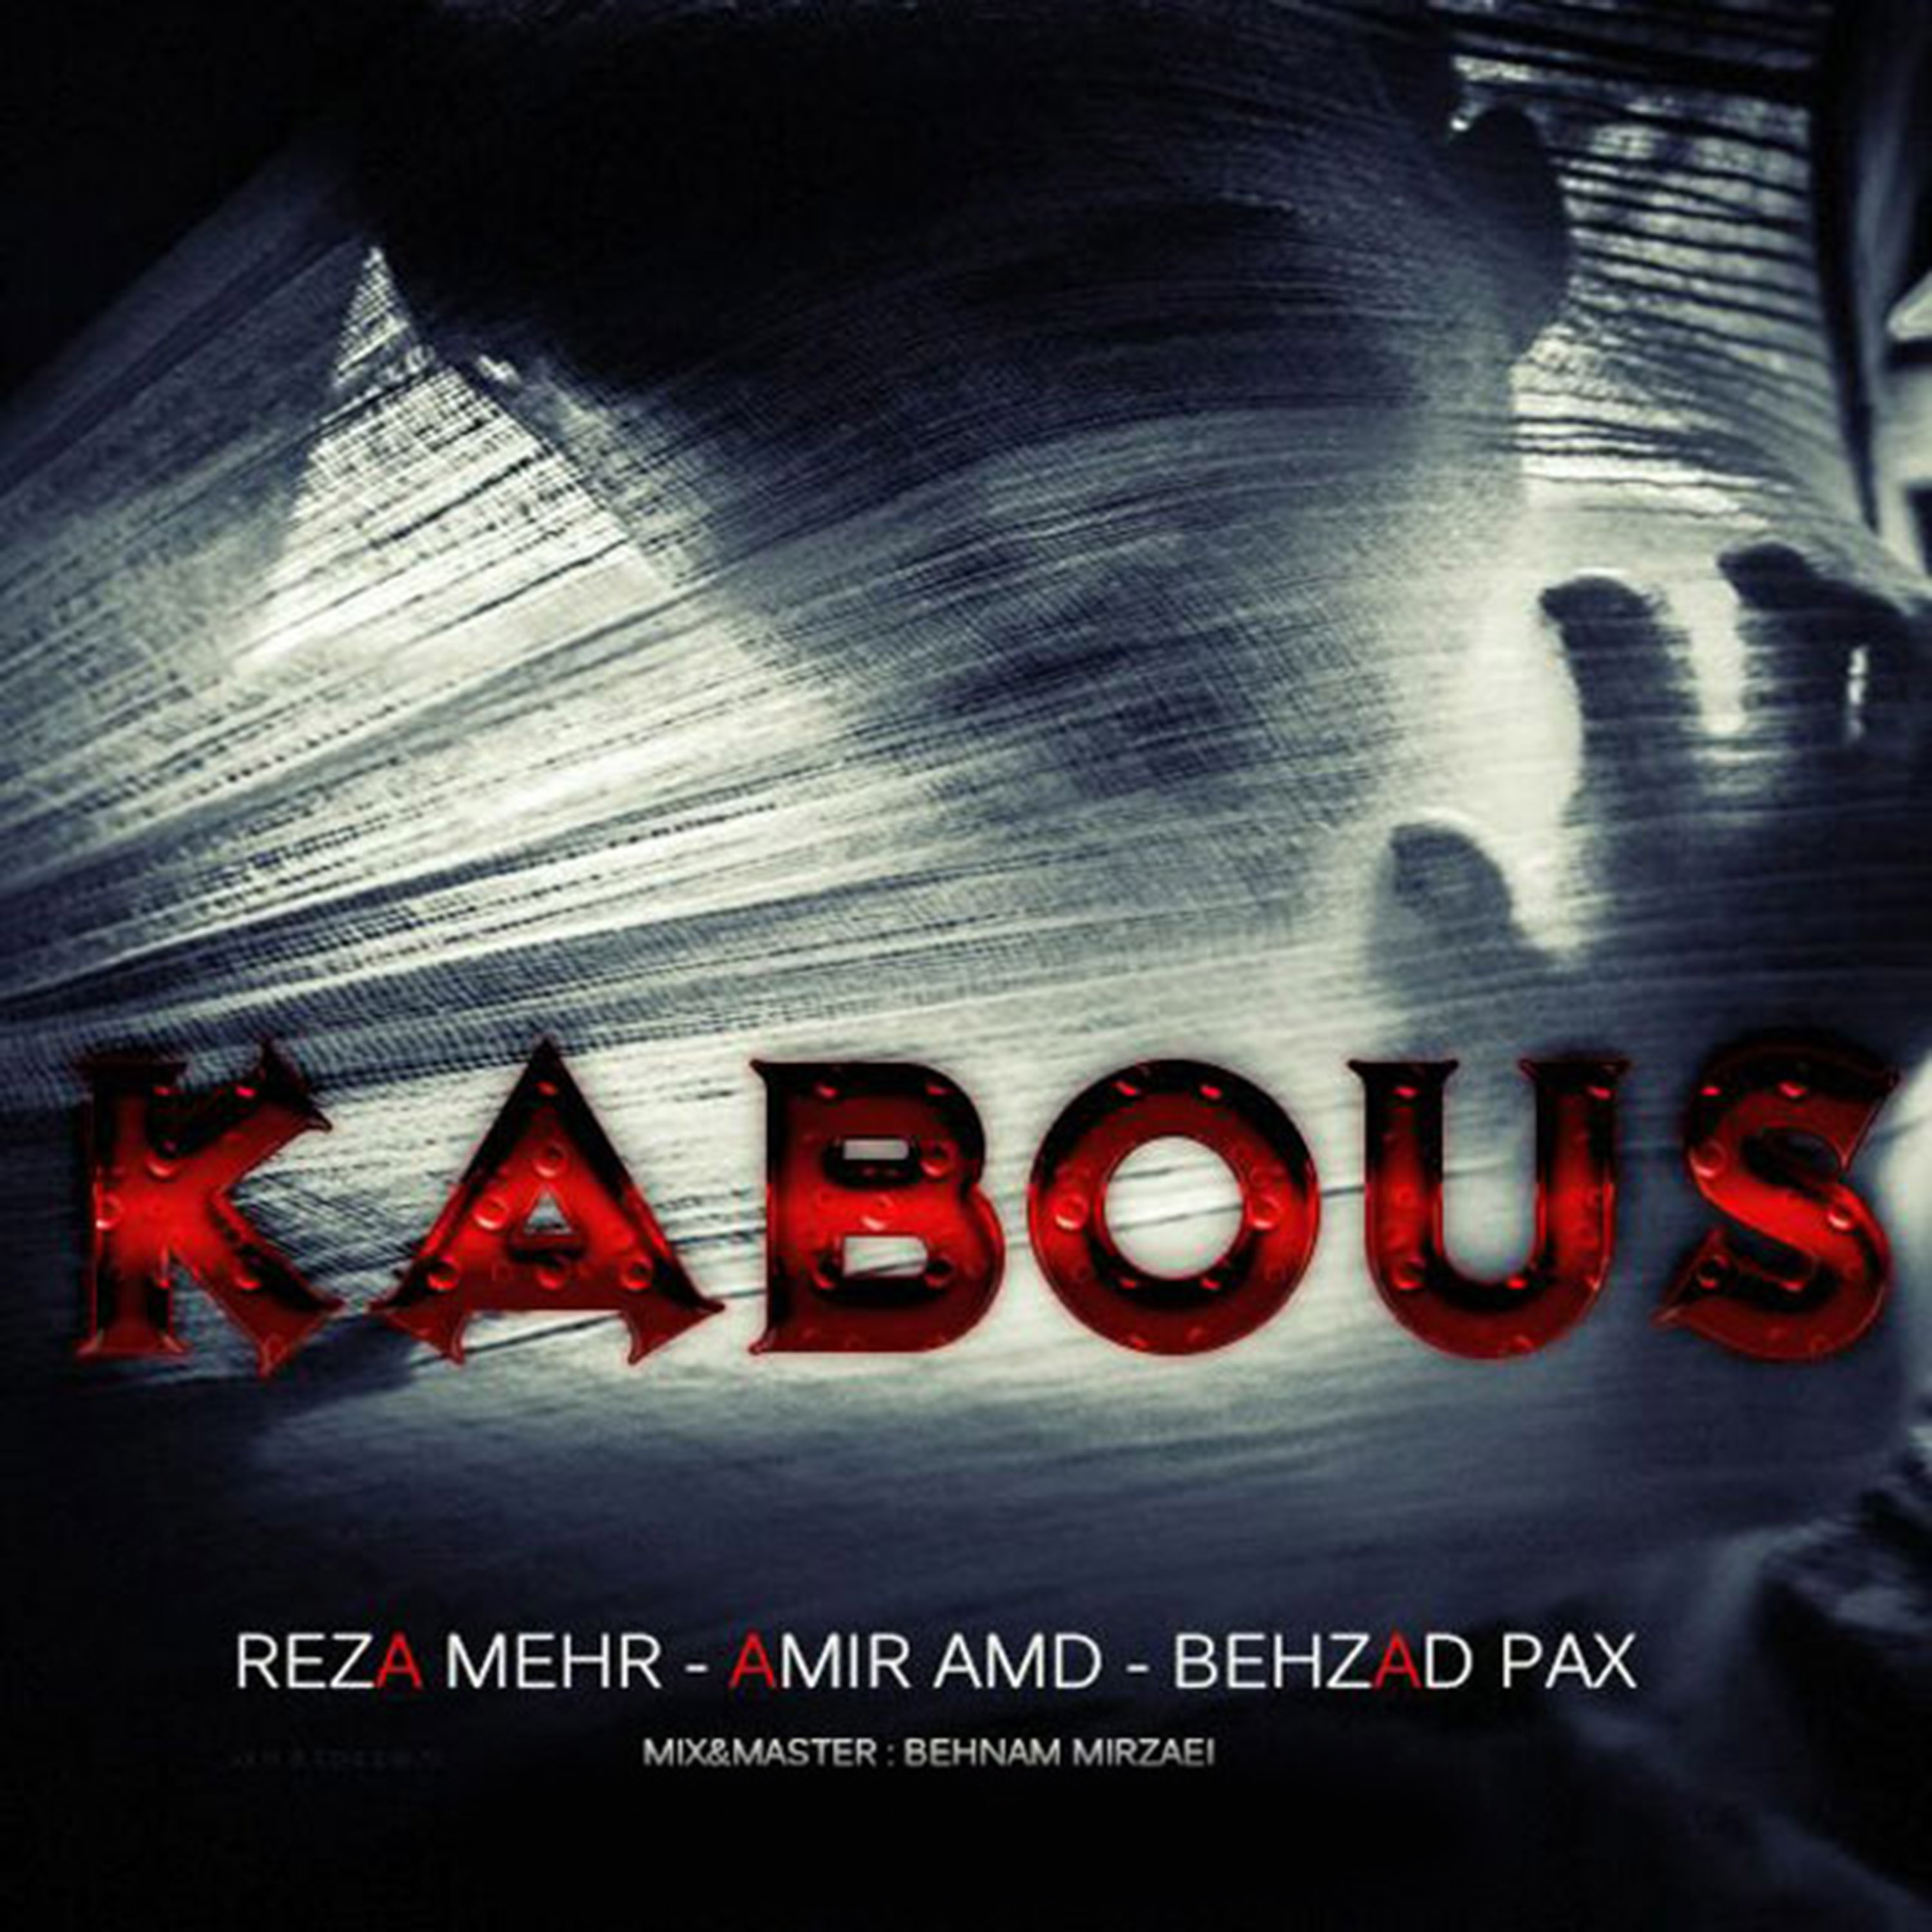  دانلود آهنگ جدید بهزاد پکس - کابوس | Download New Music By Behzad Pax - Kabous (feat. Reza Mehr & Amir Amd)